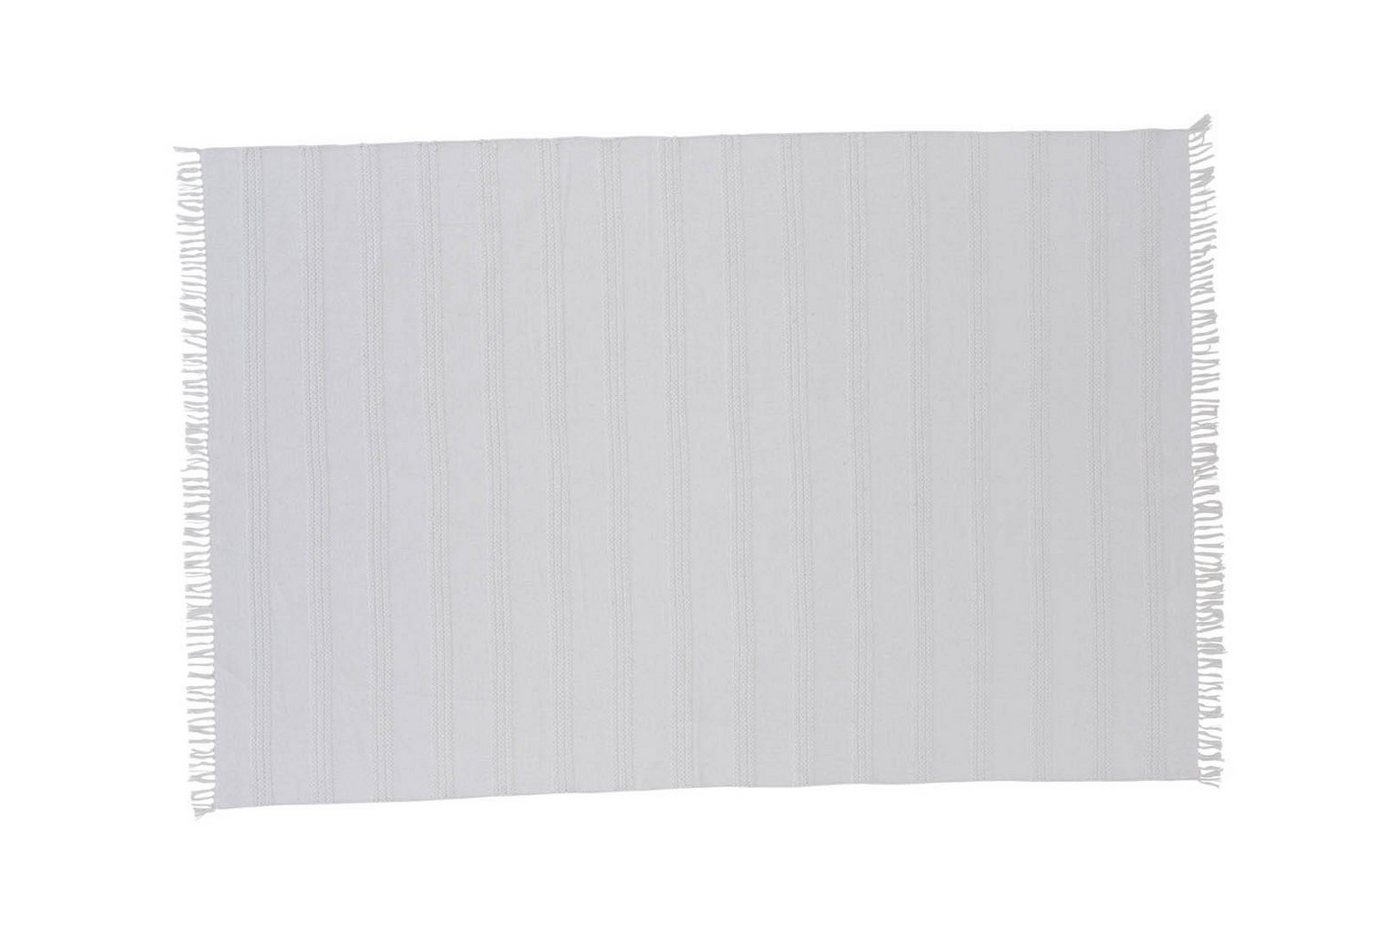 Teppich Nico Teppich 230x160 cm Baumwolle offwhite., ebuy24, Höhe: 1 mm von ebuy24